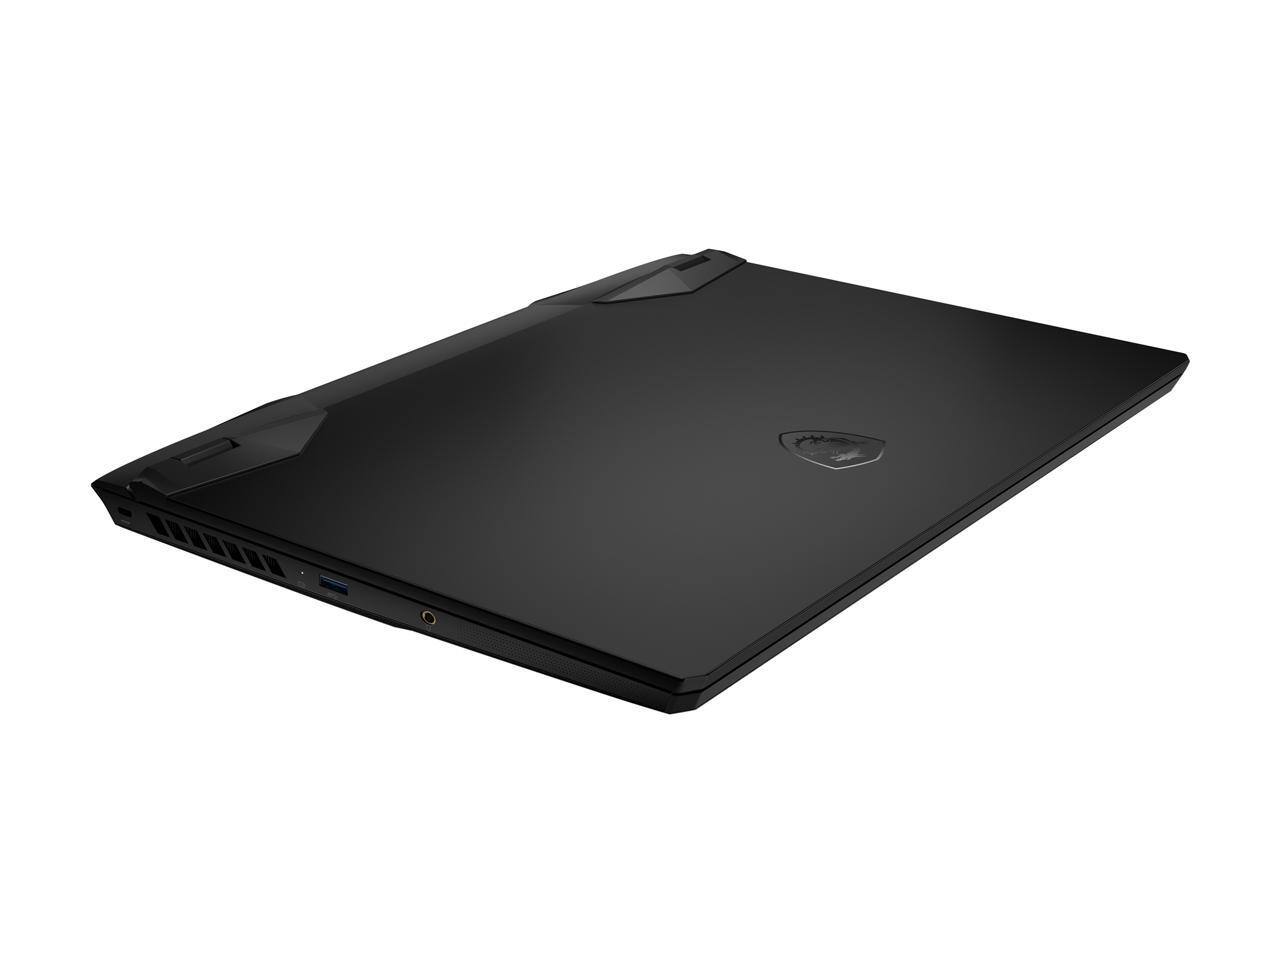 Lenovo + ZIP Laptop / Notebook Deals at Newegg / Lenovo IdeaPad 5 15ALC05 82LN006CUS Laptop $509.99